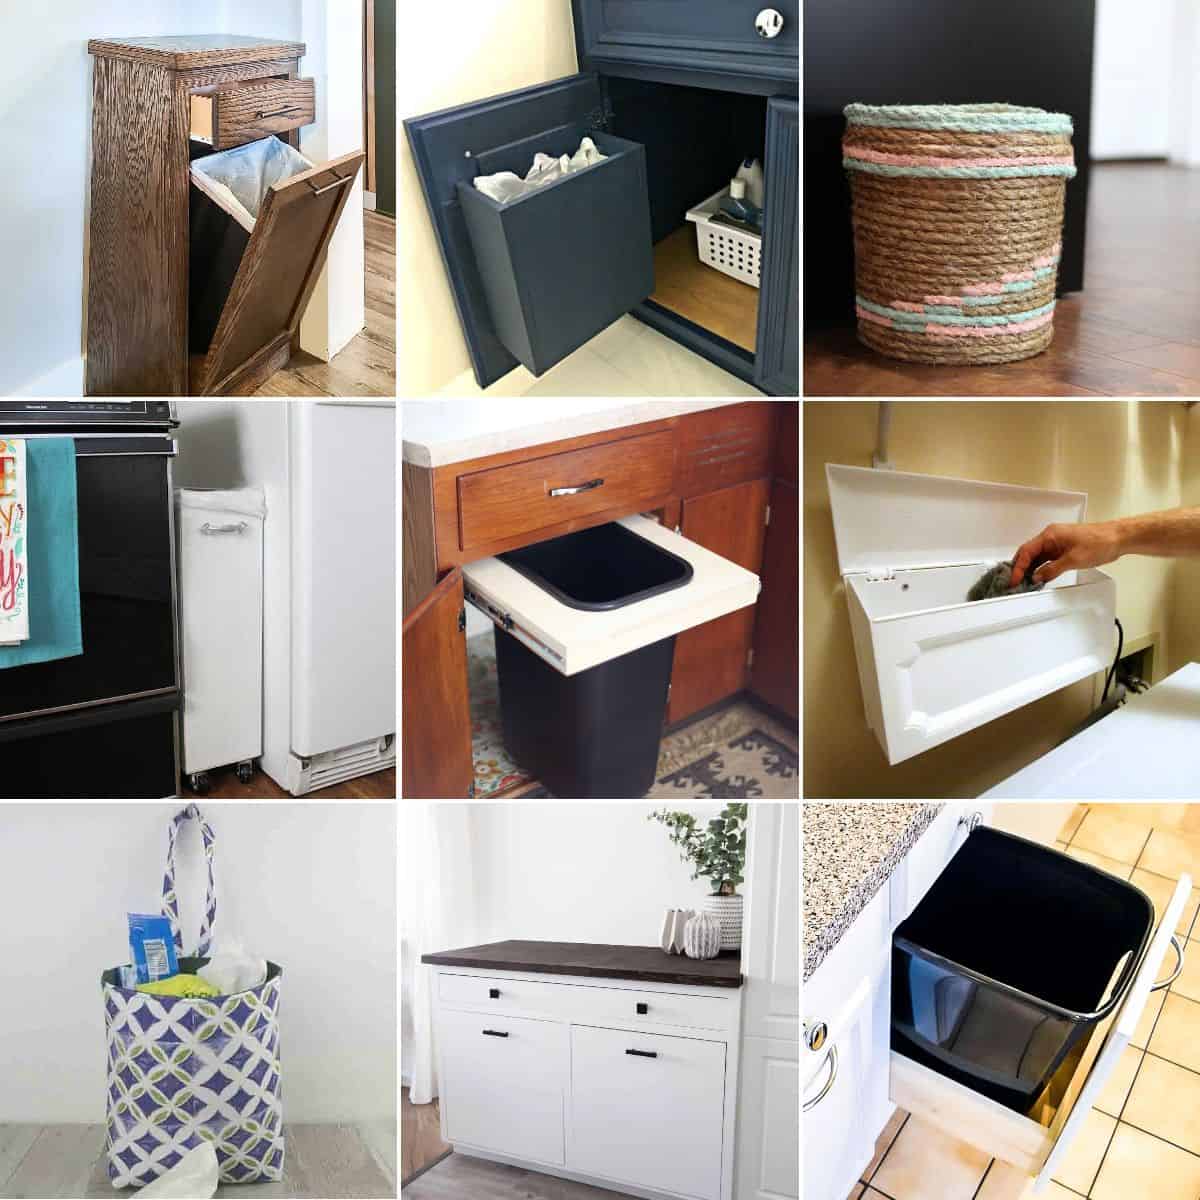 22 Garage Trash Cans ideas  trash cans, wastebaskets, garbage can